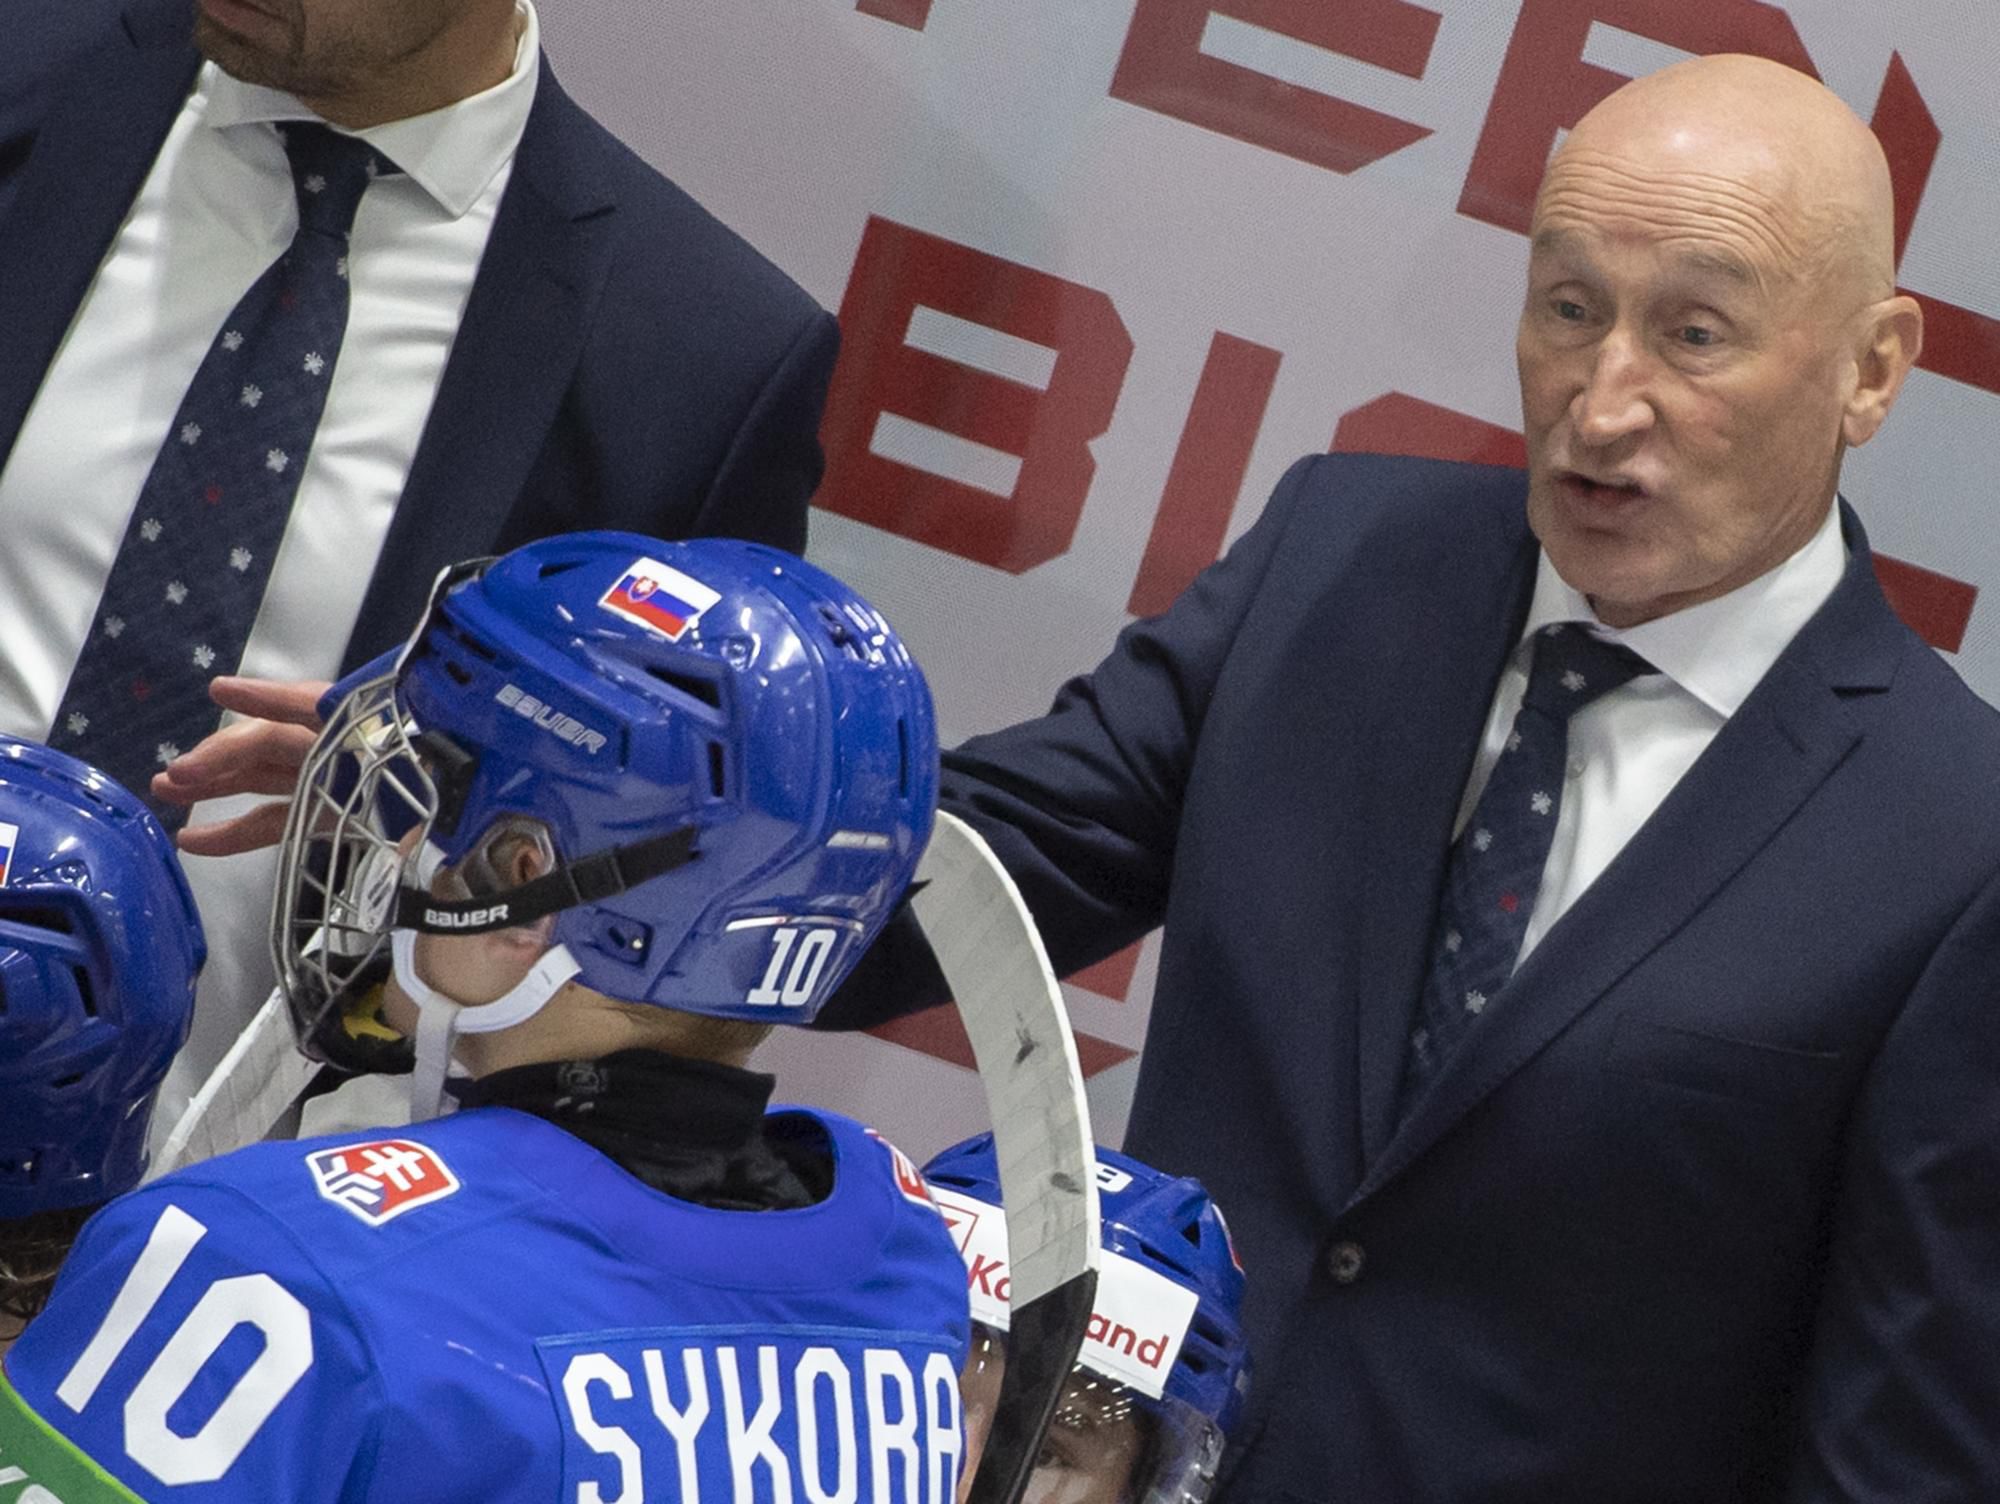 MS v hokeji 2022: Taliansko - Slovensko (Adam Sýkora, tréner Craig Ramsay)